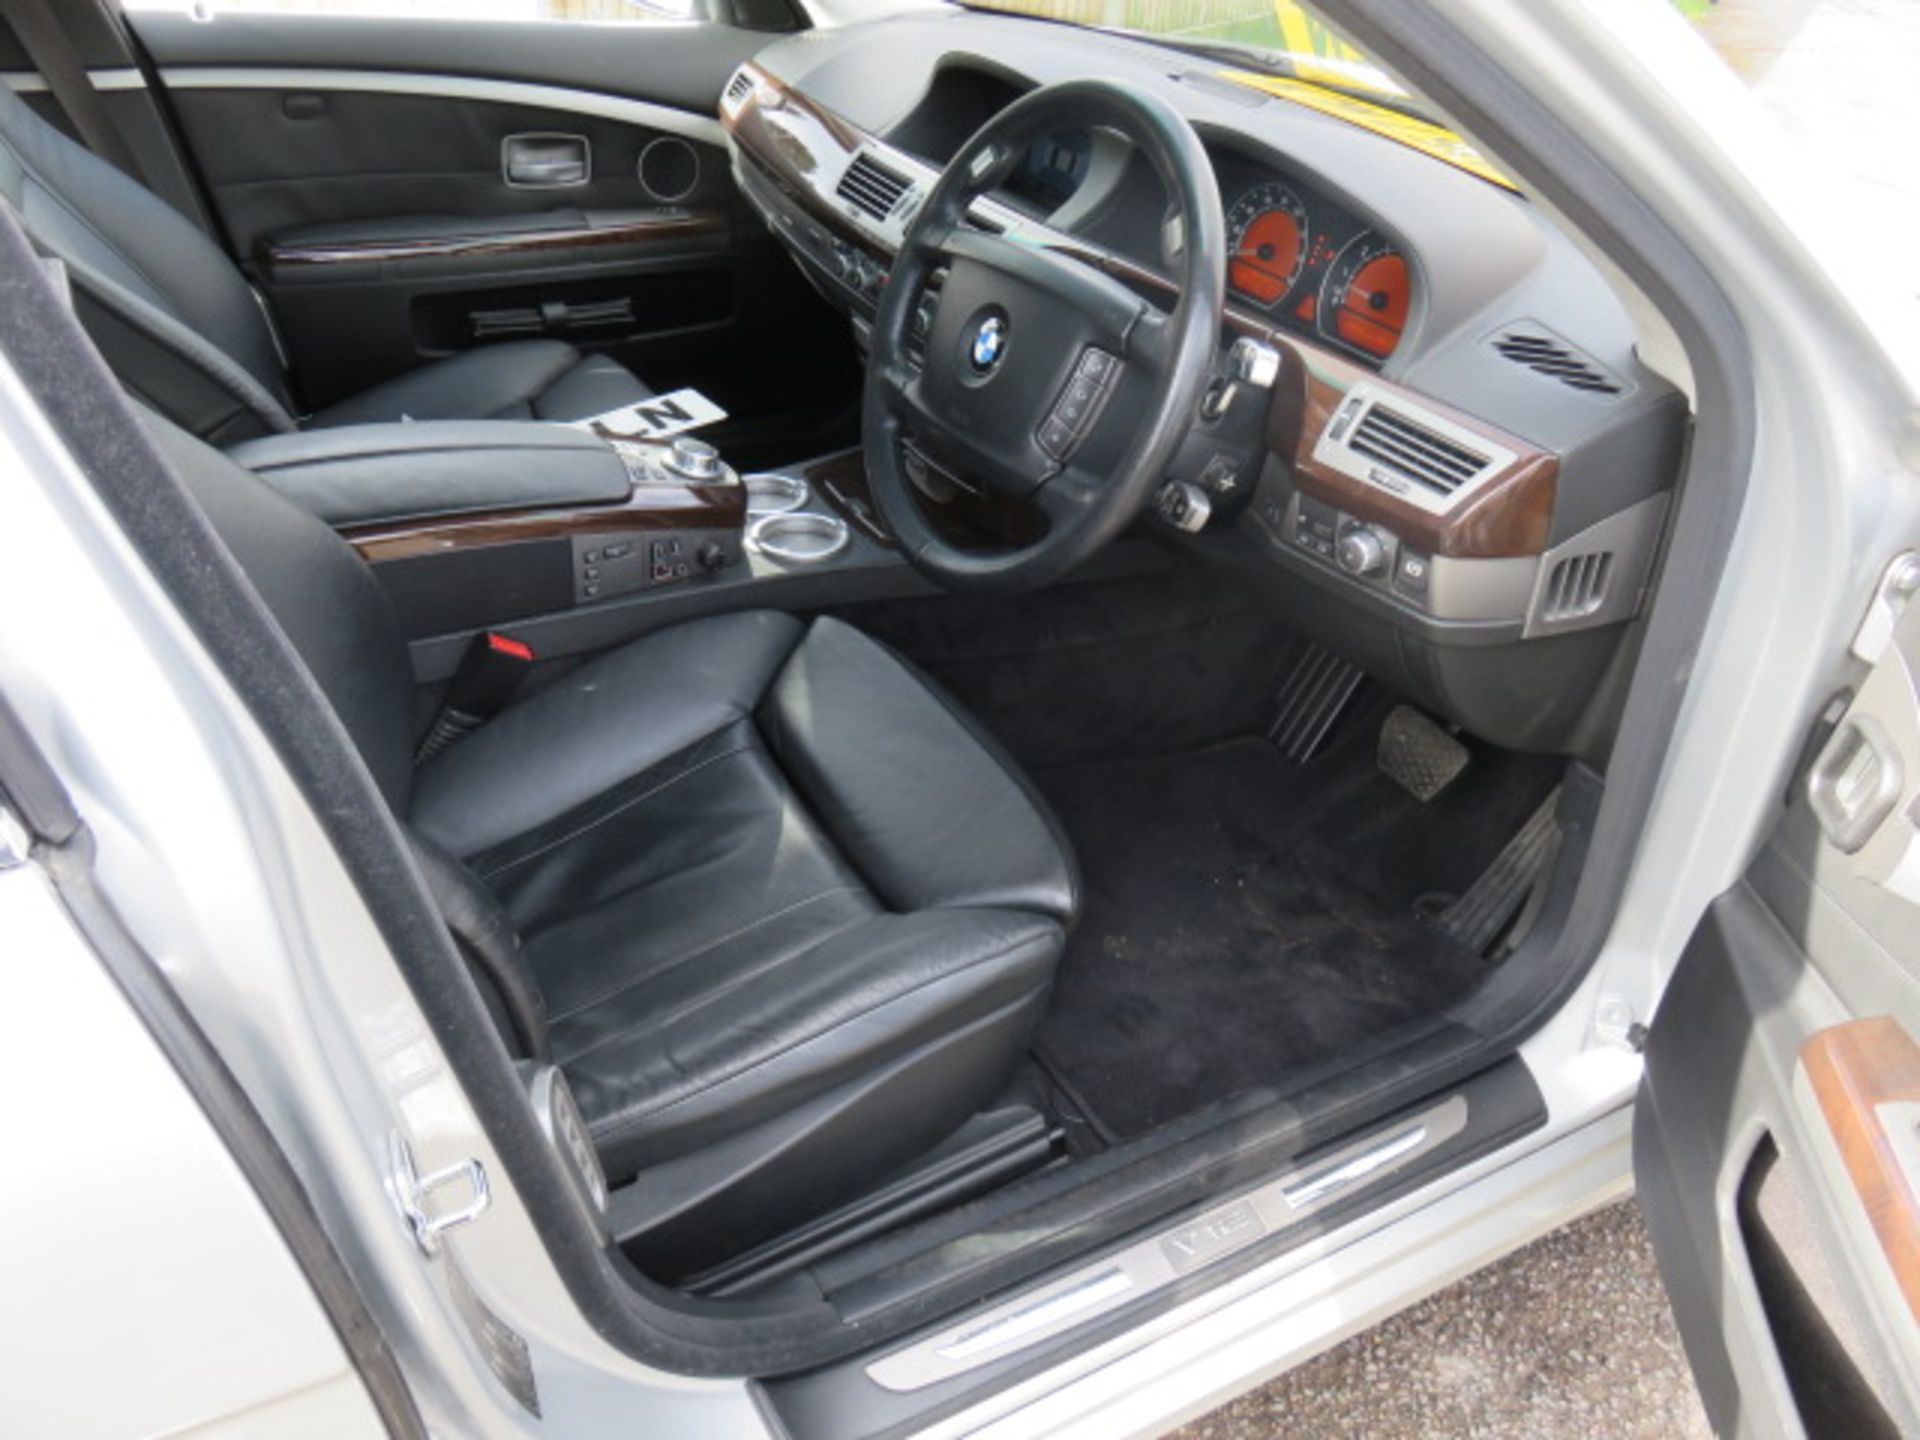 1 BMW 760Li 6.0 Petrol Silver Four Door Saloon - Image 10 of 19